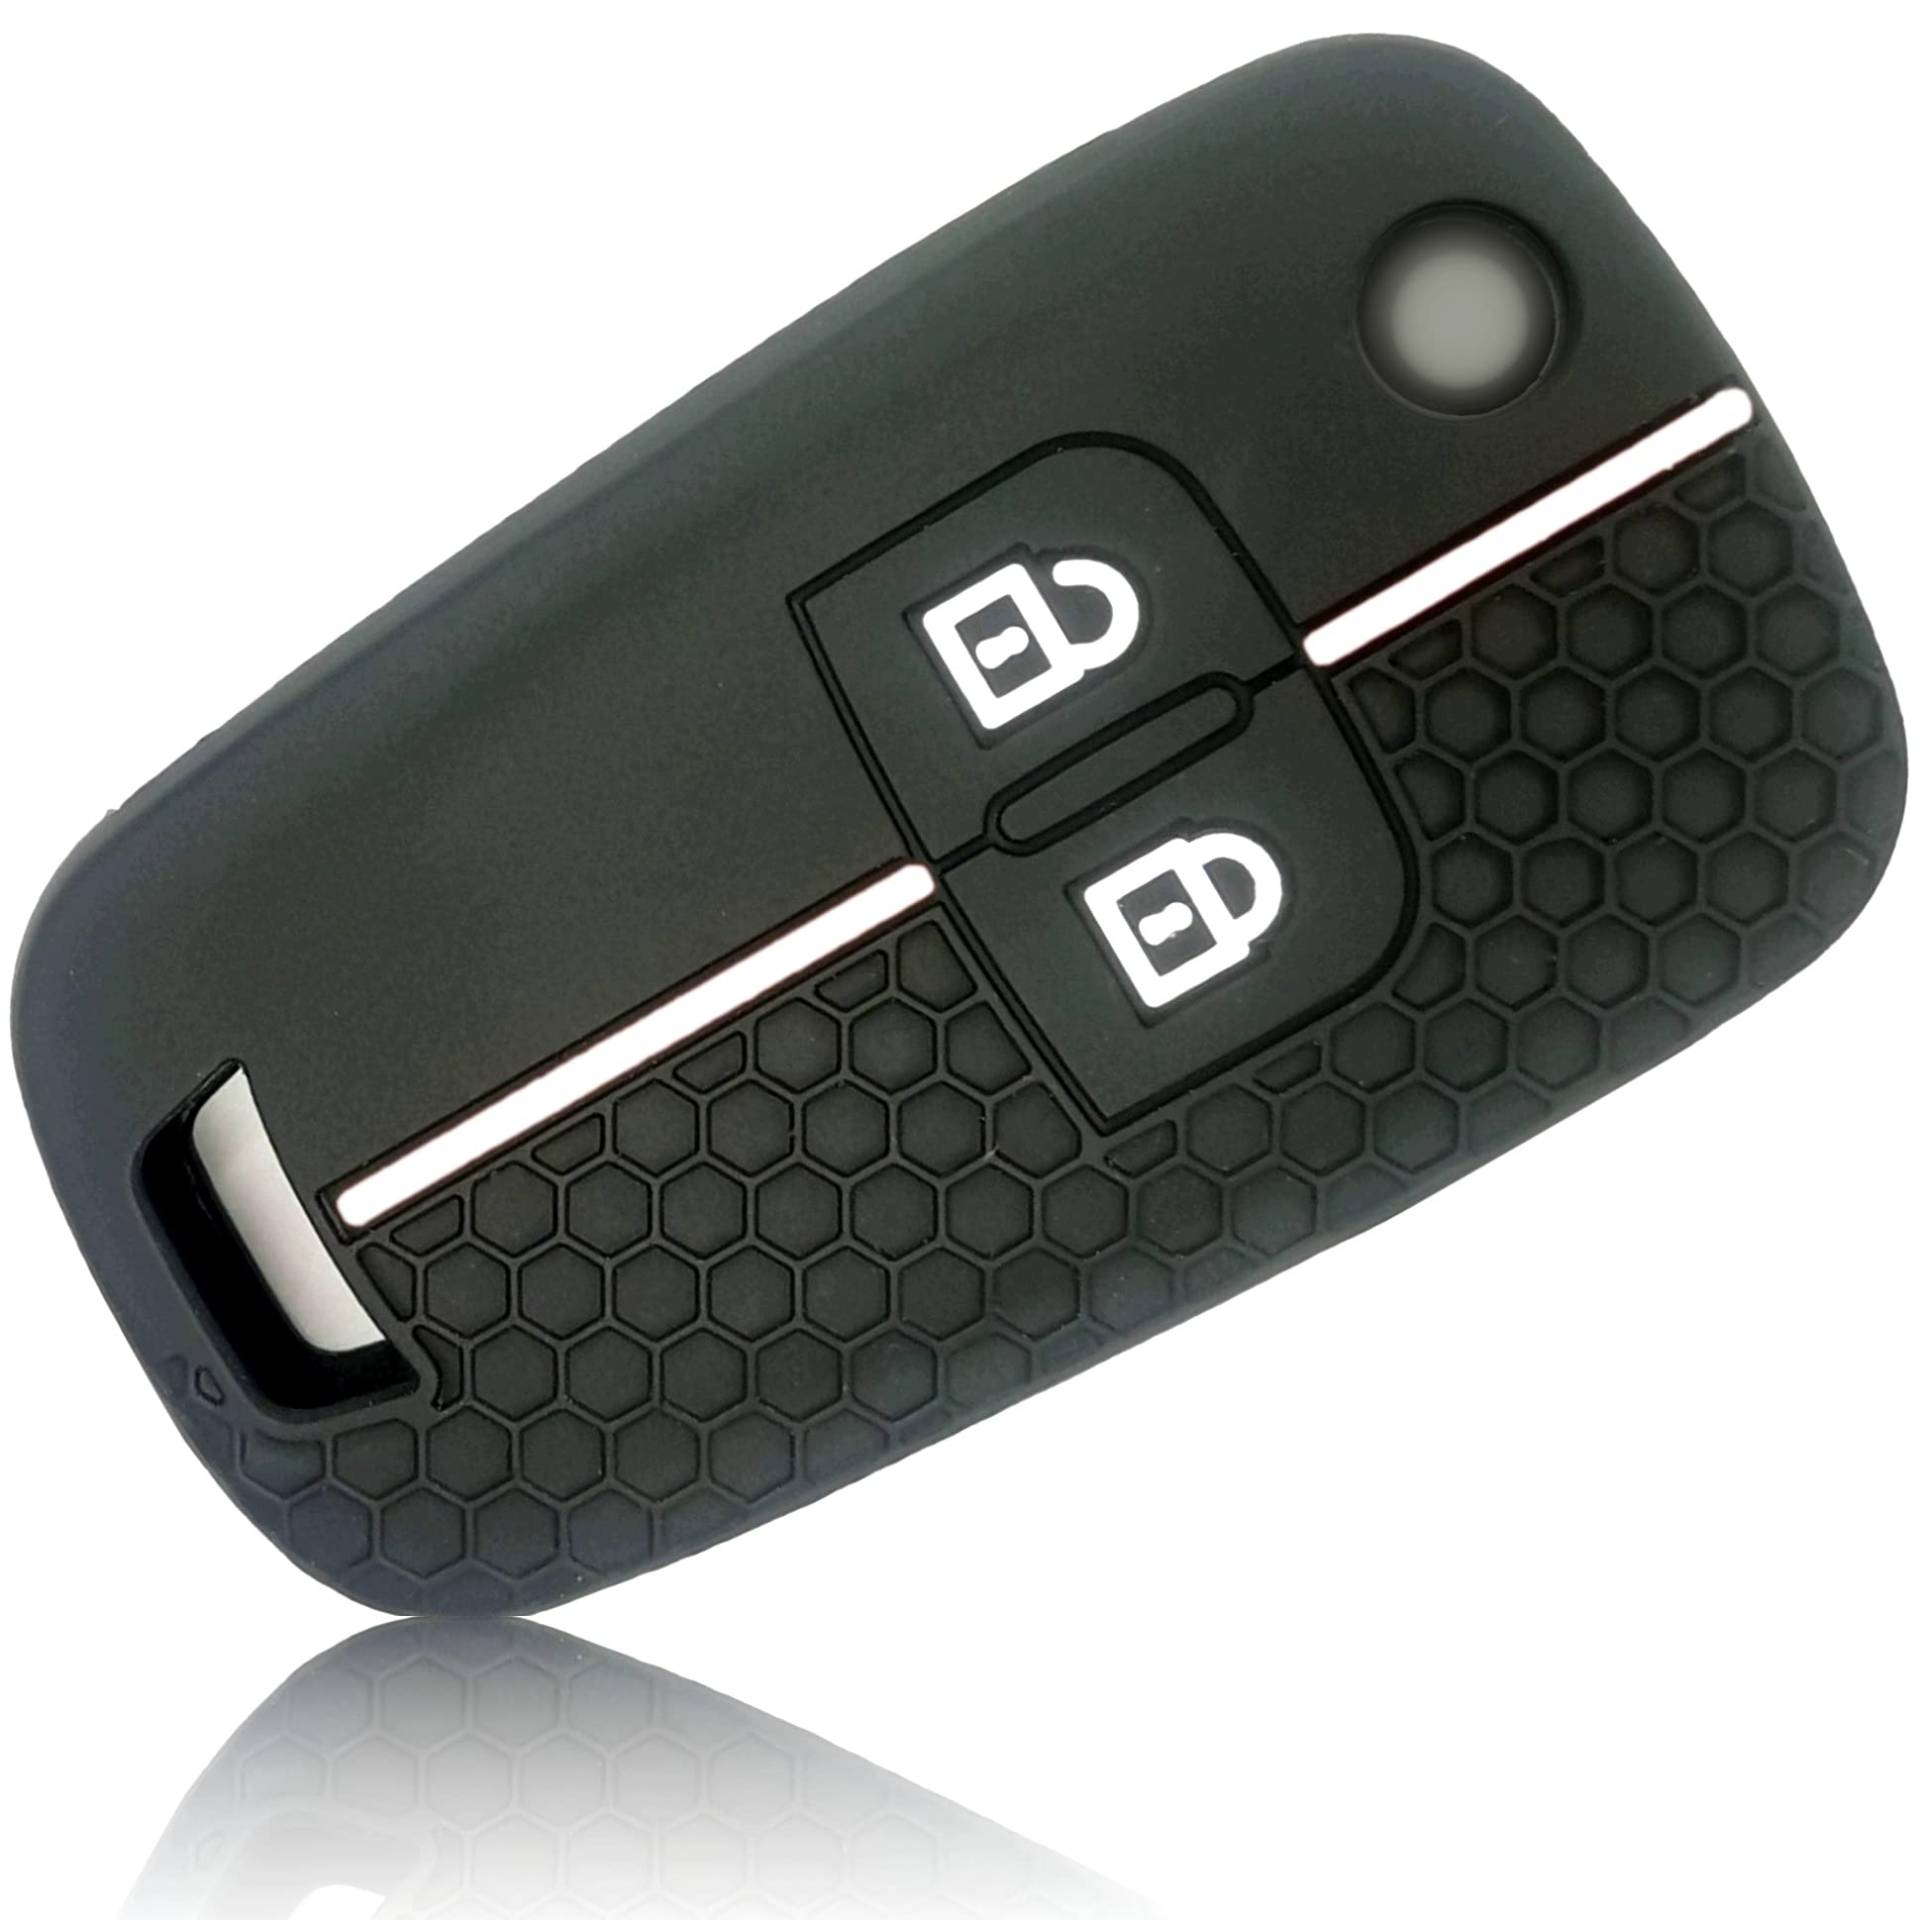 FOAMO Autoschlüssel Hülle kompatibel mit Opel Chevrolet 2-Tasten - Silikon Schutzhülle Cover Schlüssel-Hülle in Schwarz Weiß von FOAMO